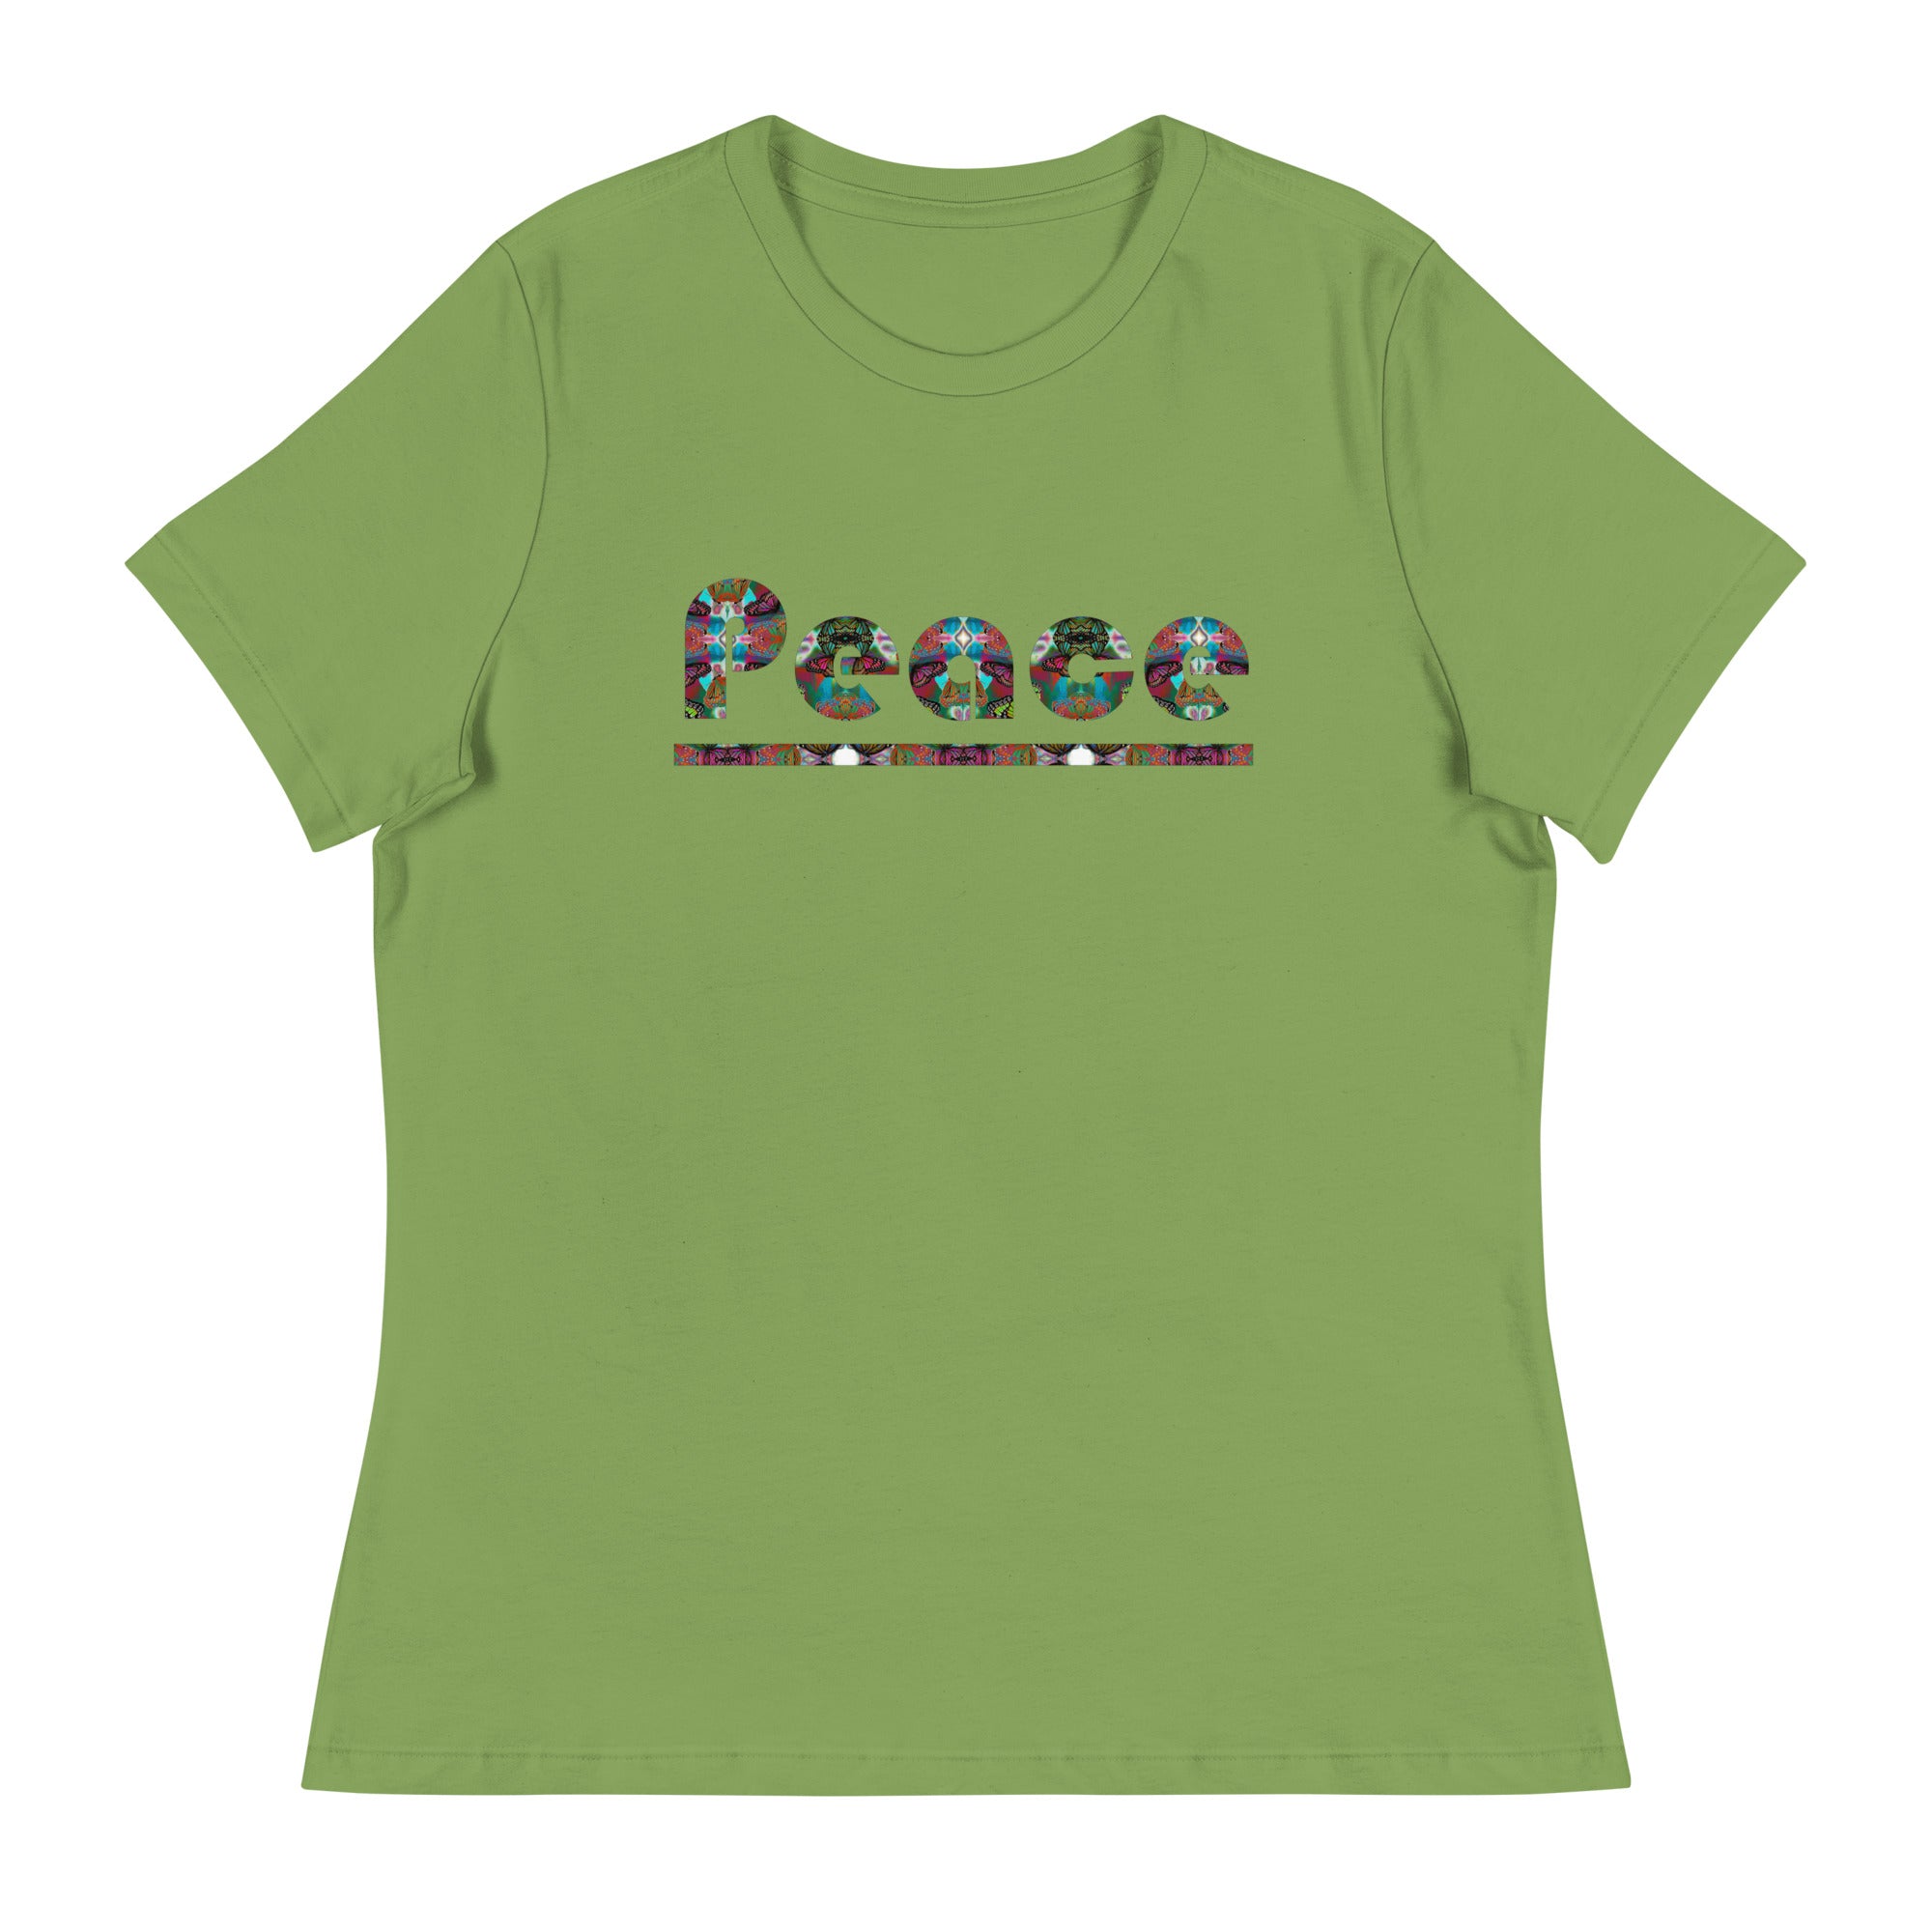 Peace ~ Women's Graphic T-Shirt, Butterfly Word Art Short Sleeve Top